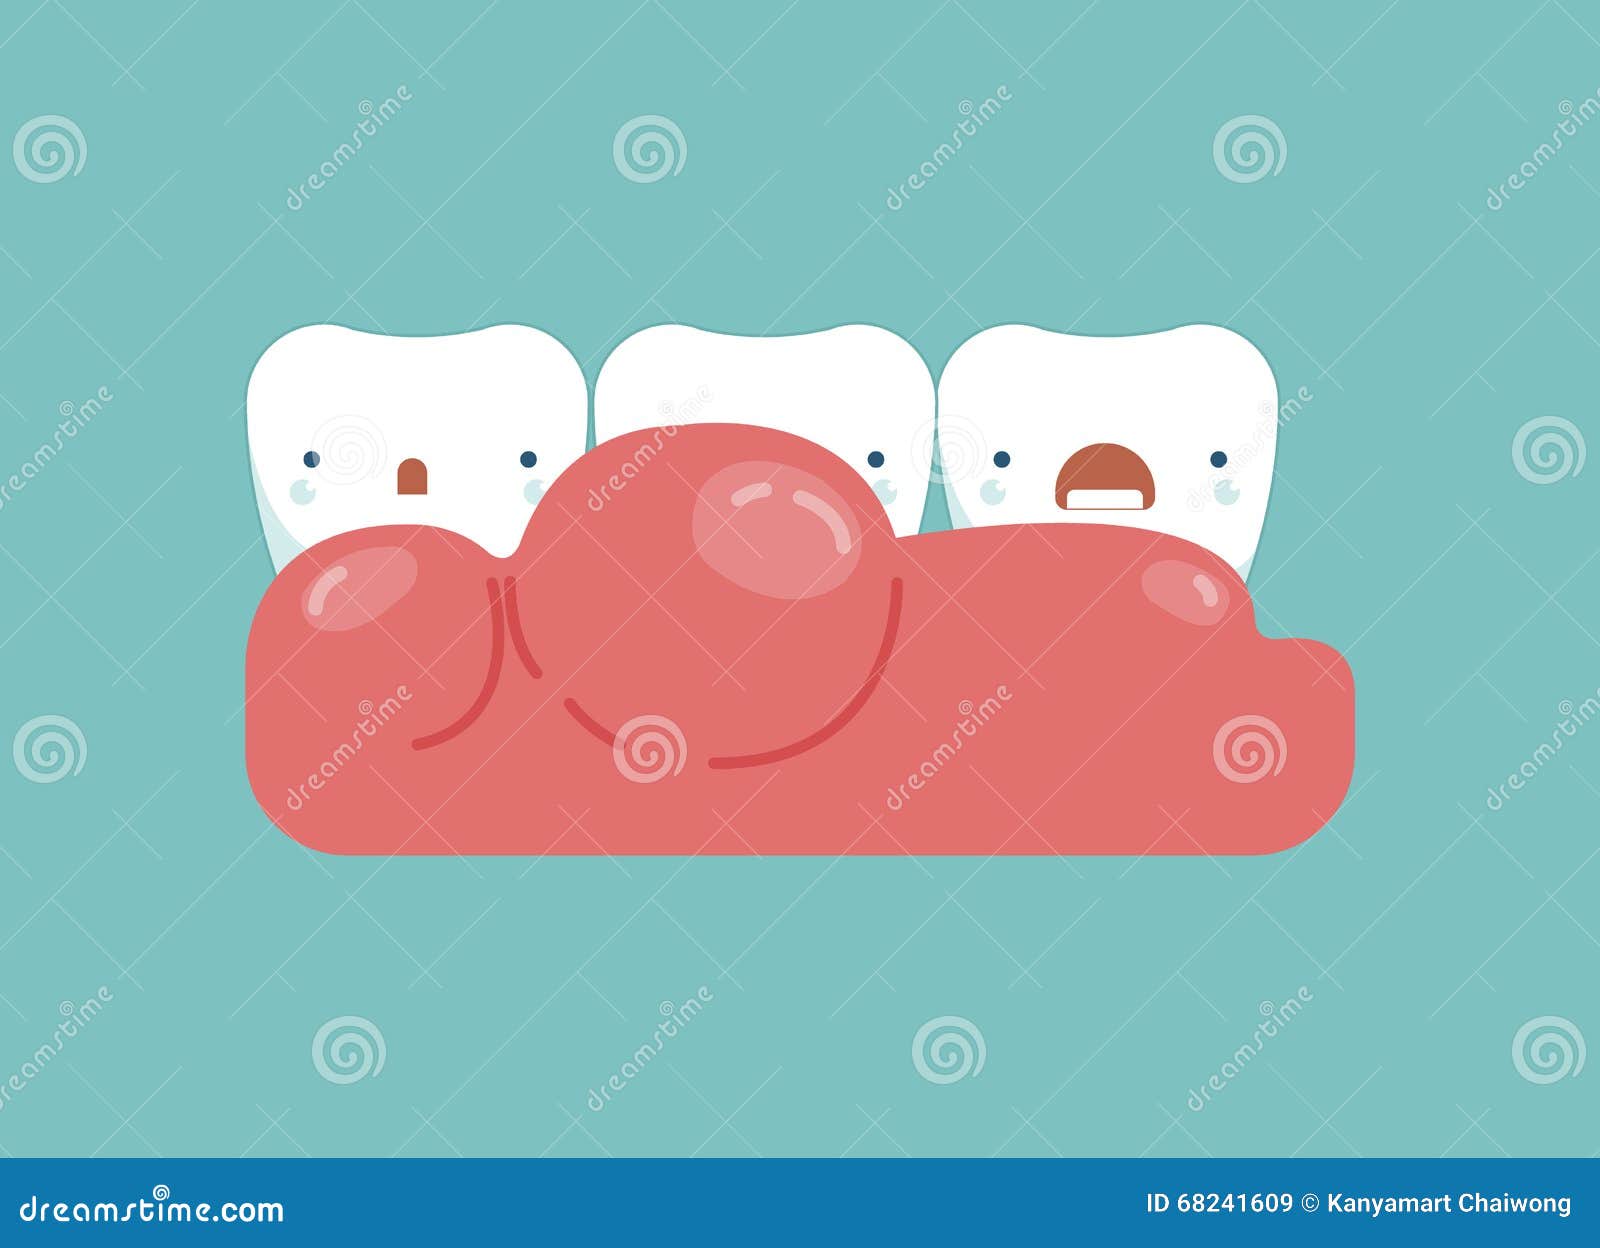 gingivitis around the teeth ,dental concept